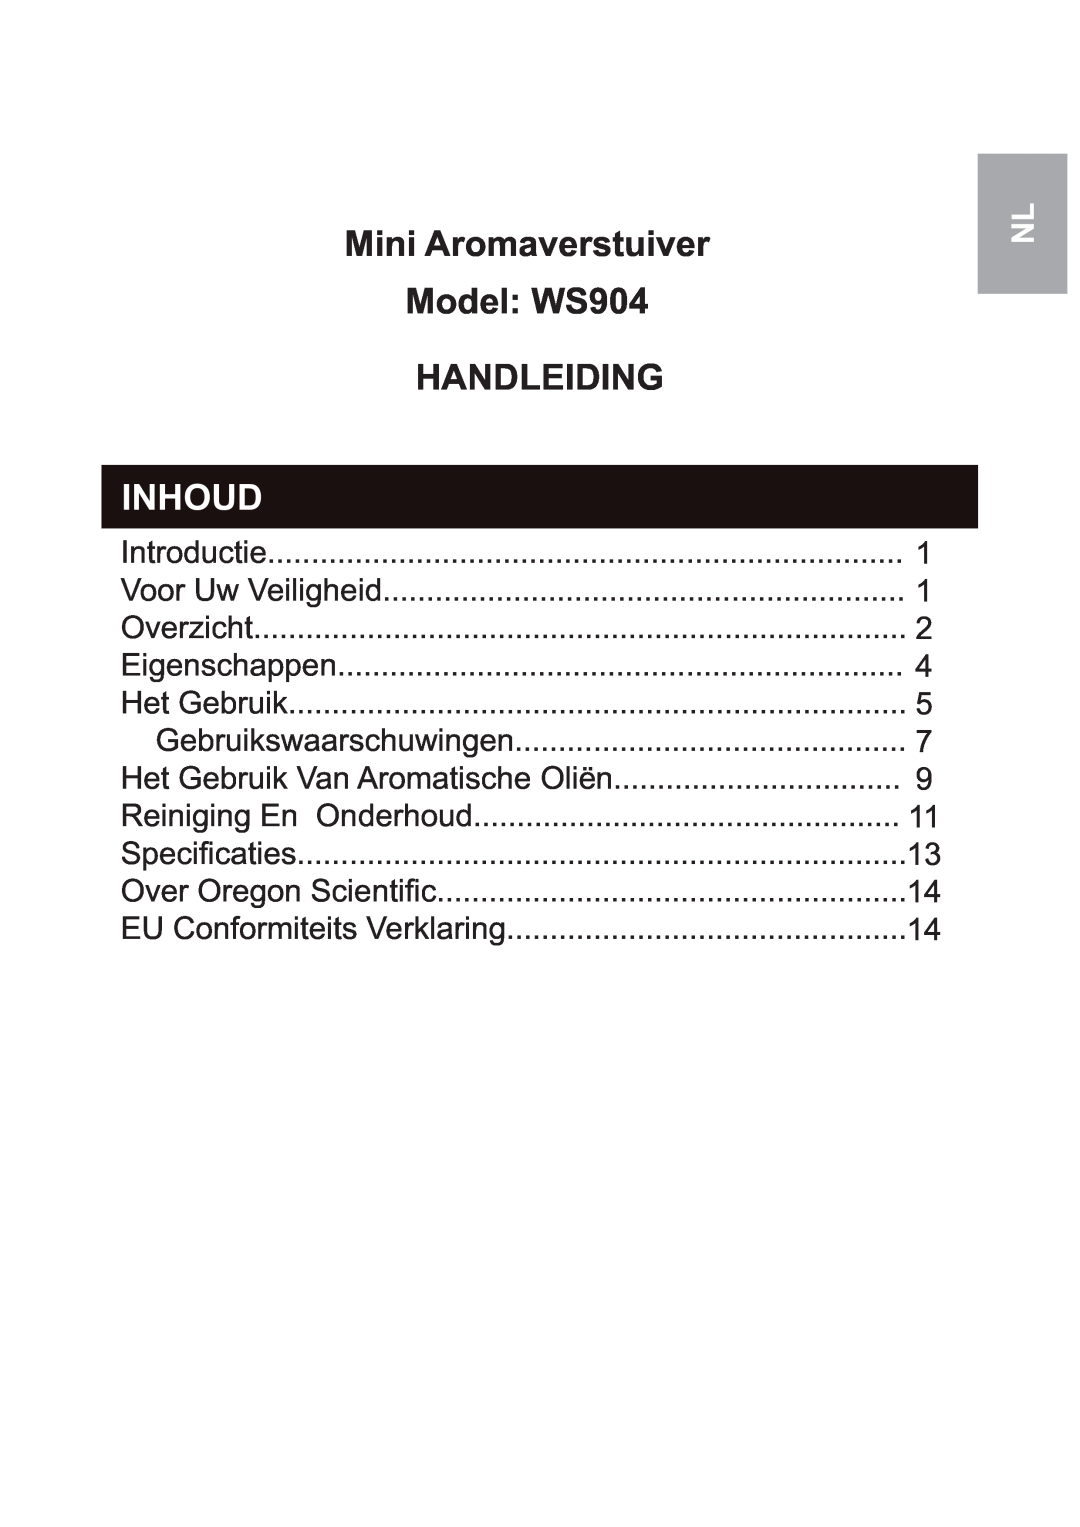 Oregon Scientific user manual Mini Aromaverstuiver Model: WS904 HANDLEIDING, Inhoud 